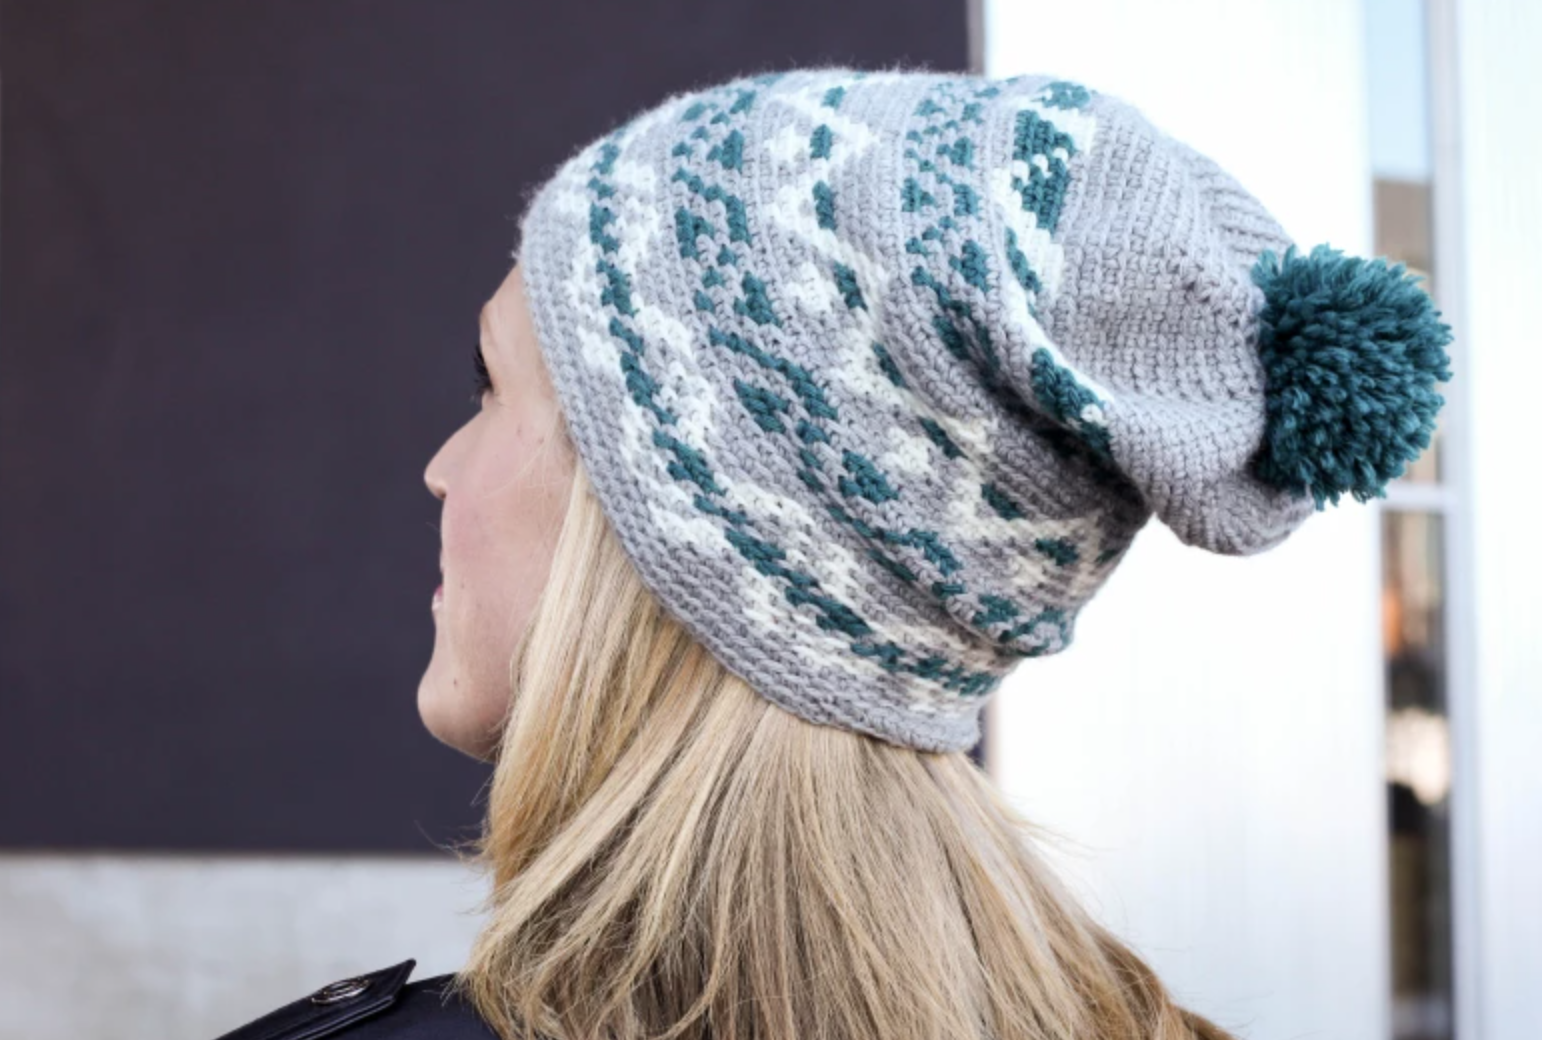 teal and gray fair isle crochet hat